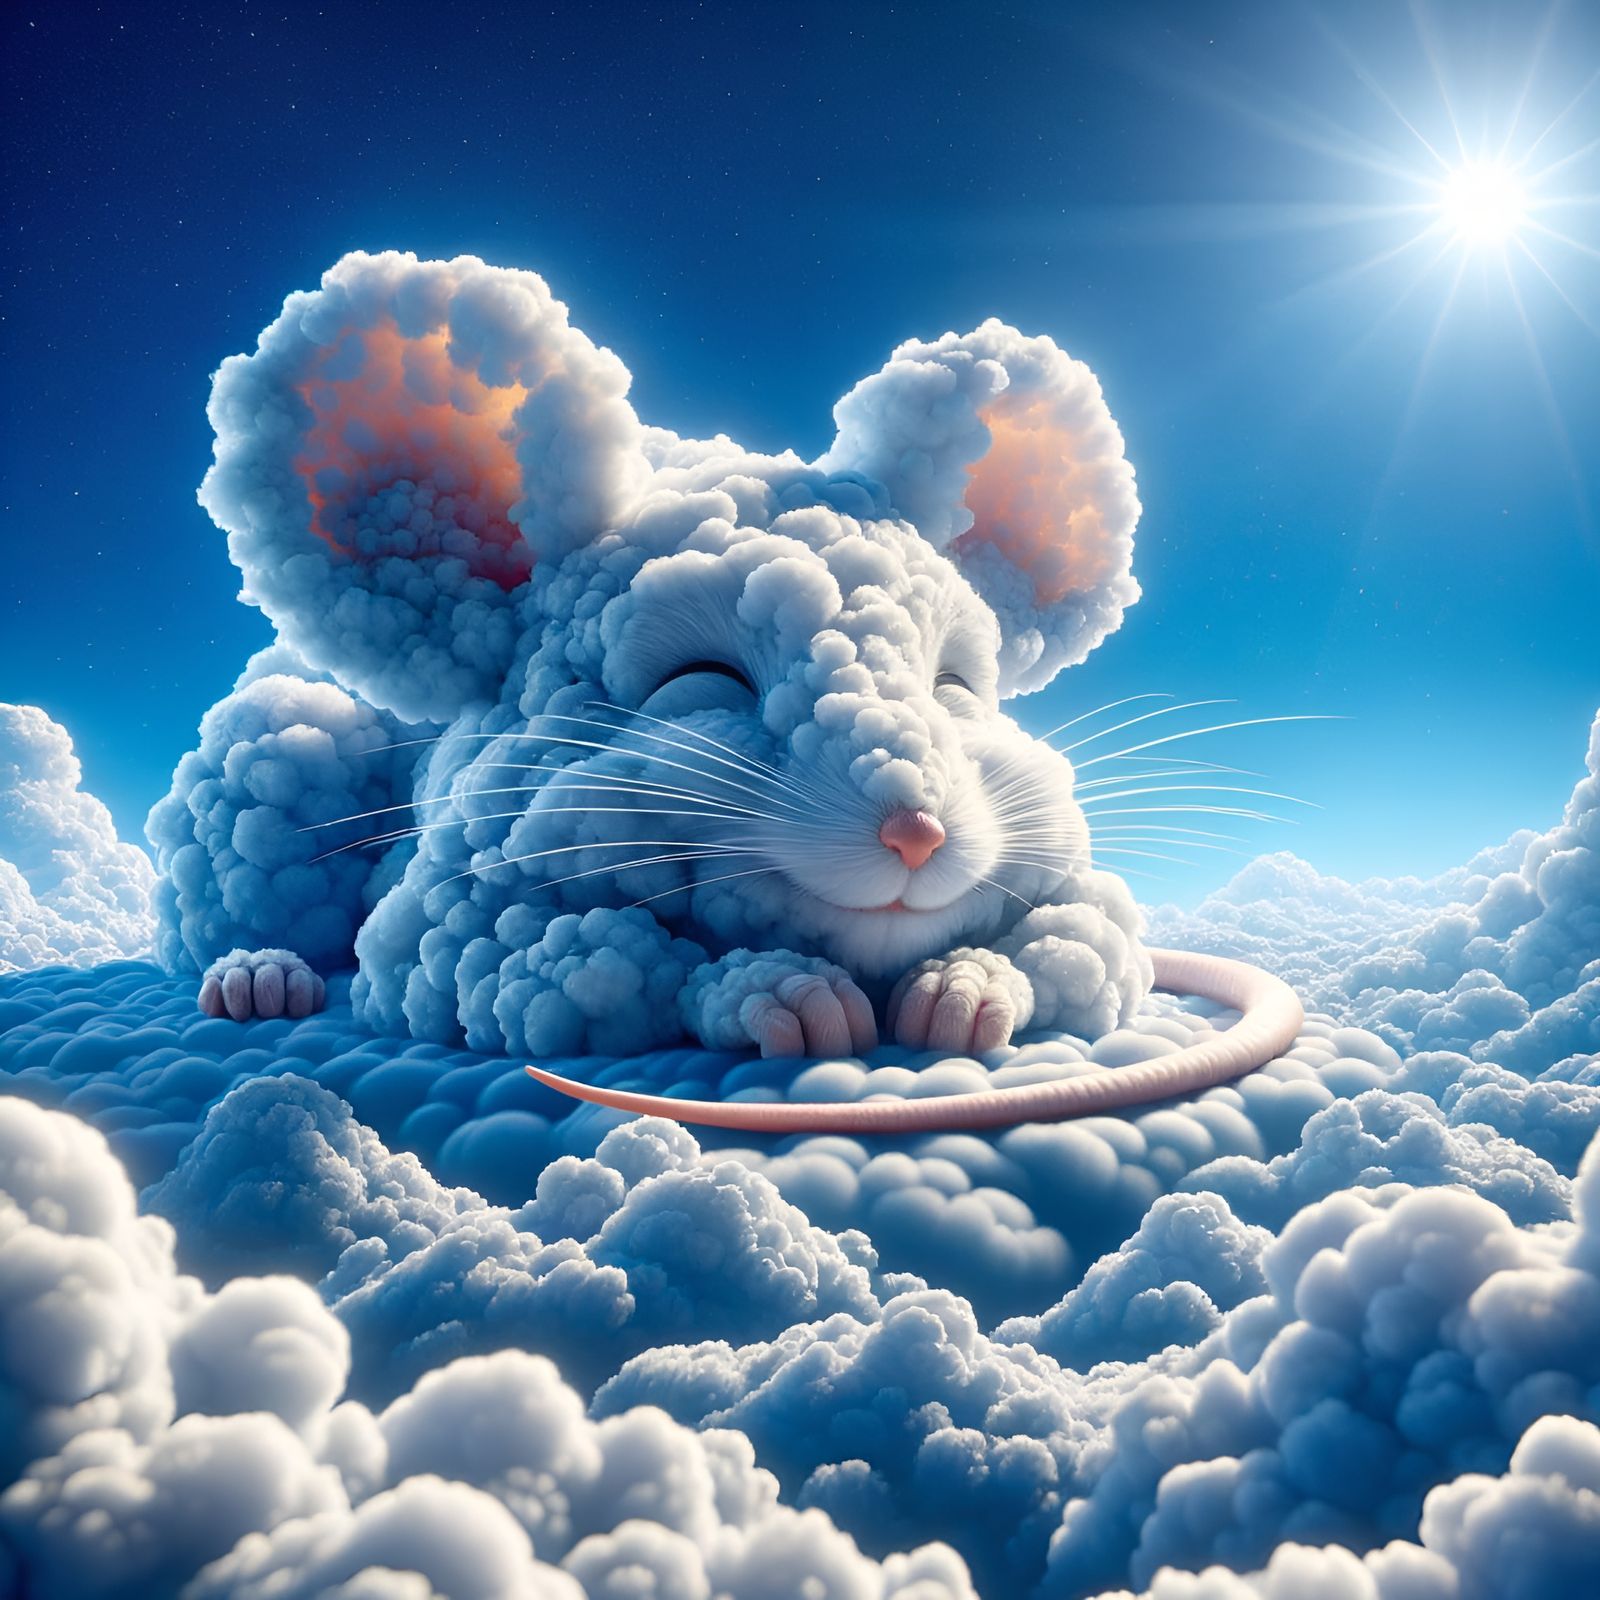 Sleepy Cloud Mouse